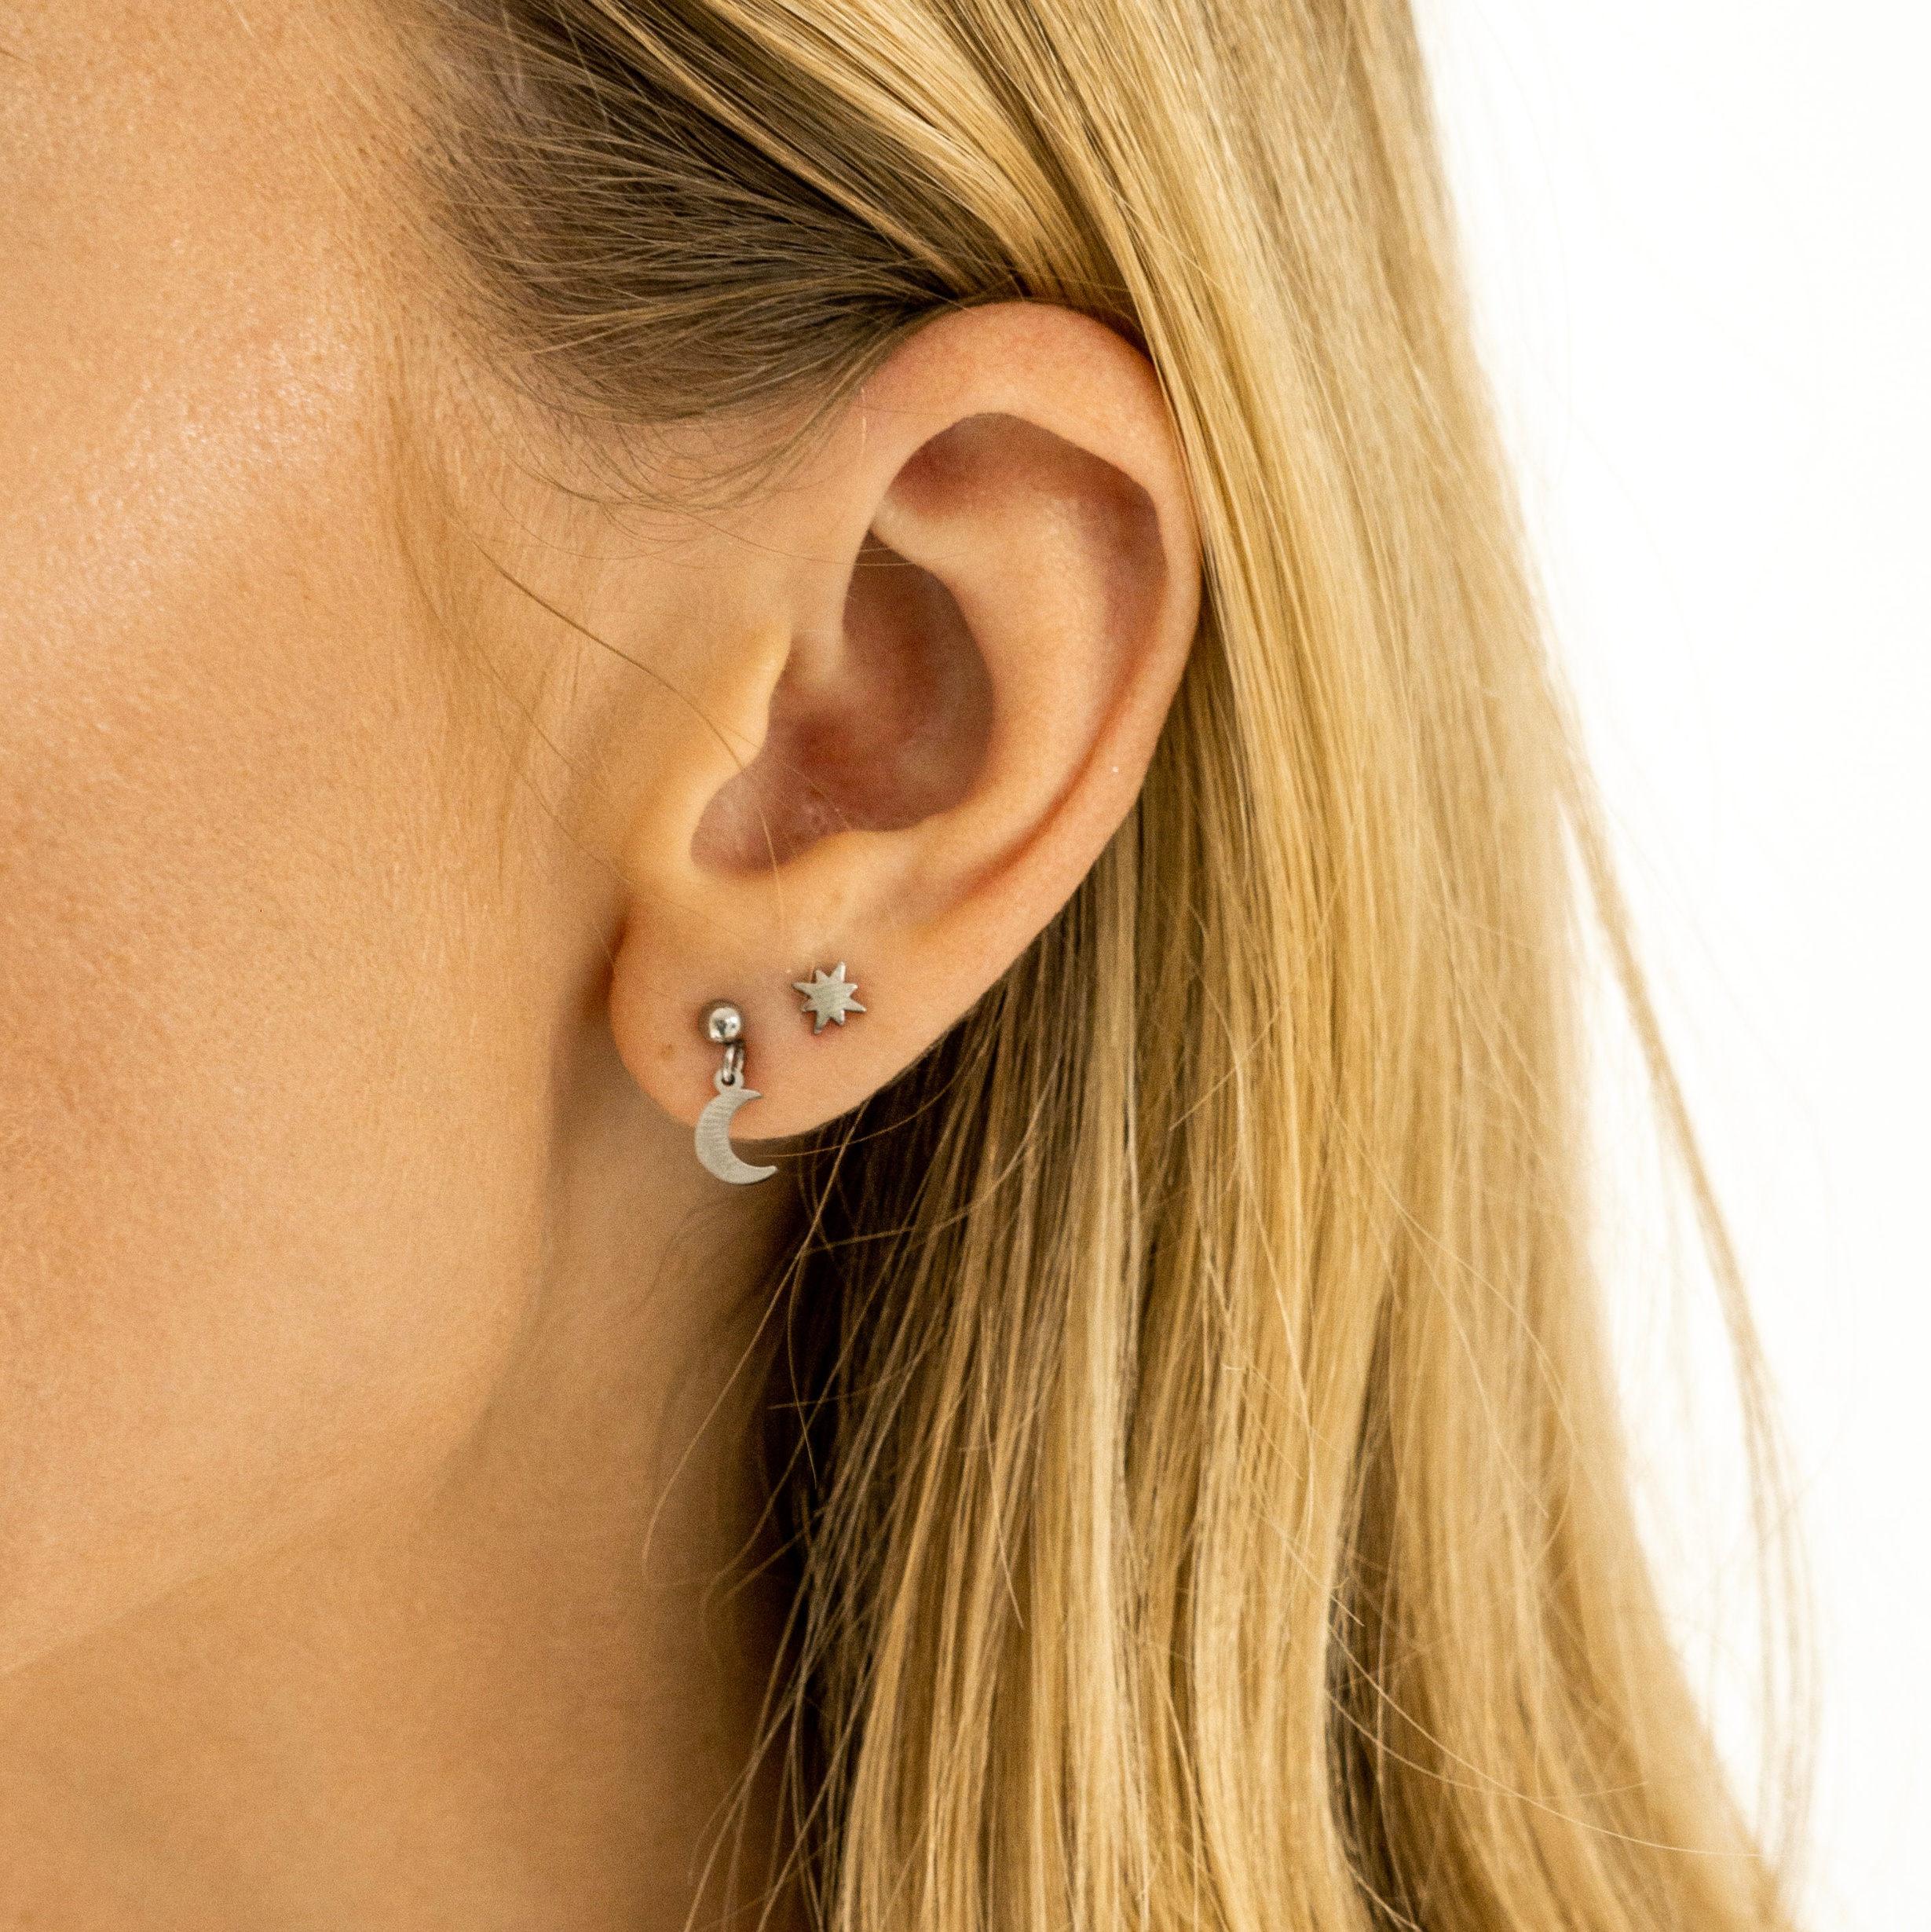 Stud earrings with charm moon